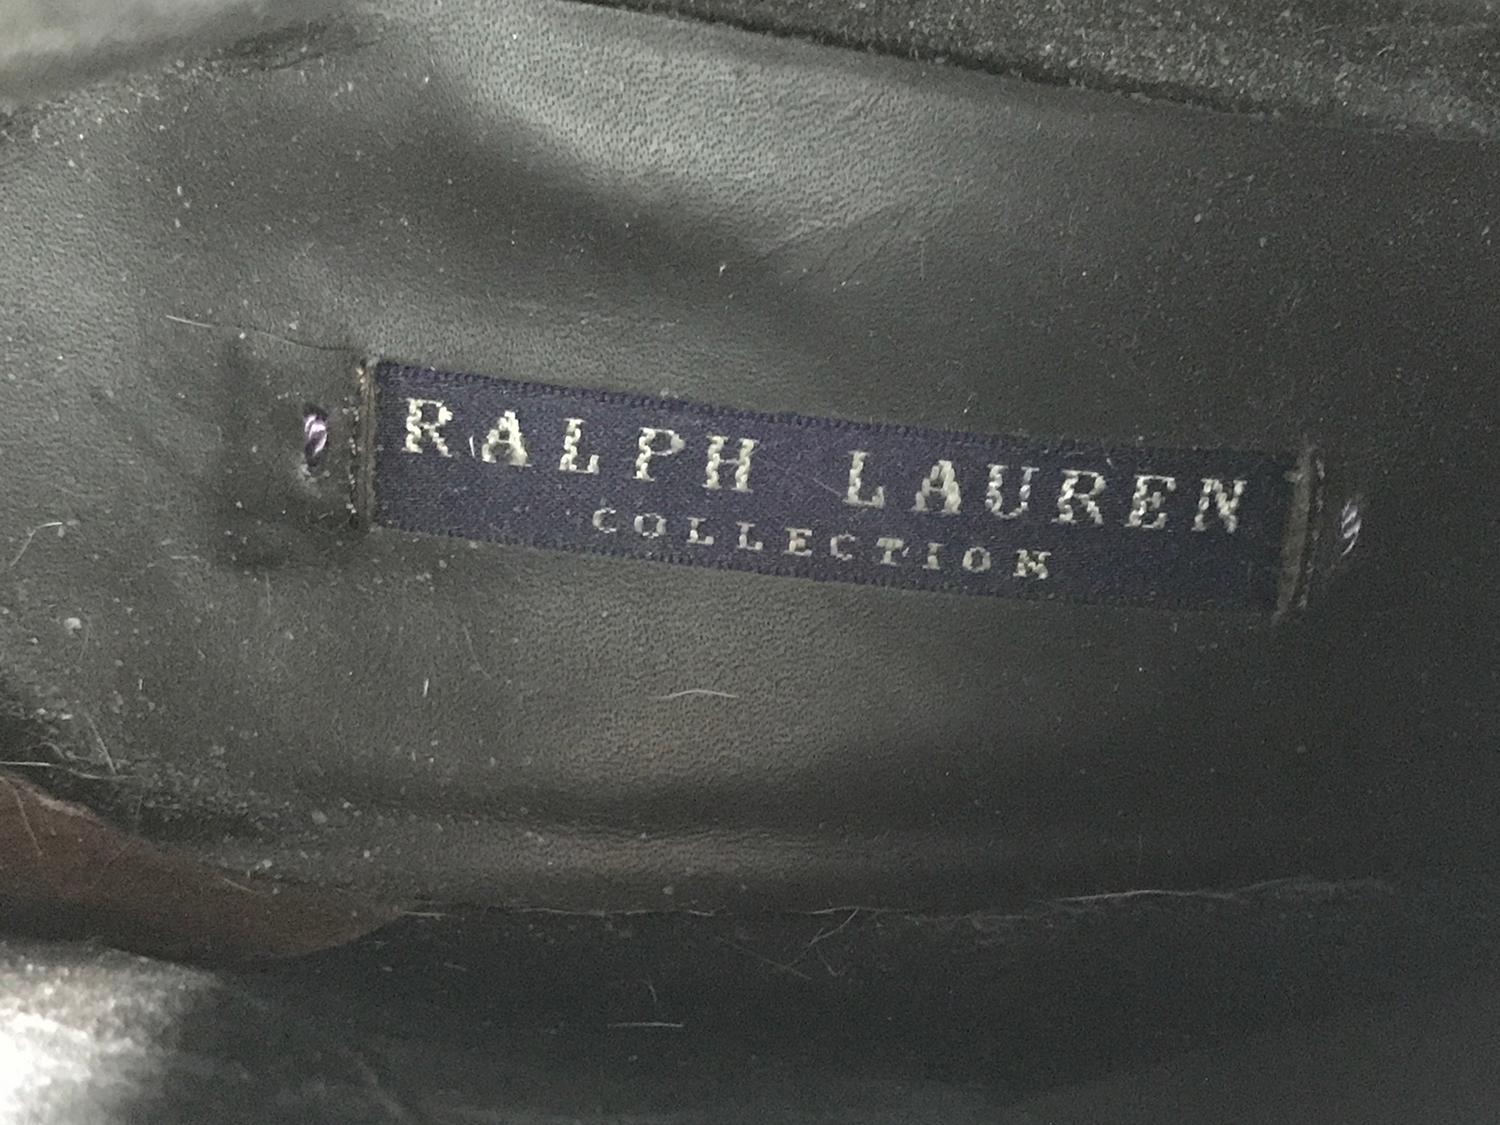 Ralph Lauren Collection Spotted Fur & Leather High Heel Platform Boots 8B 4